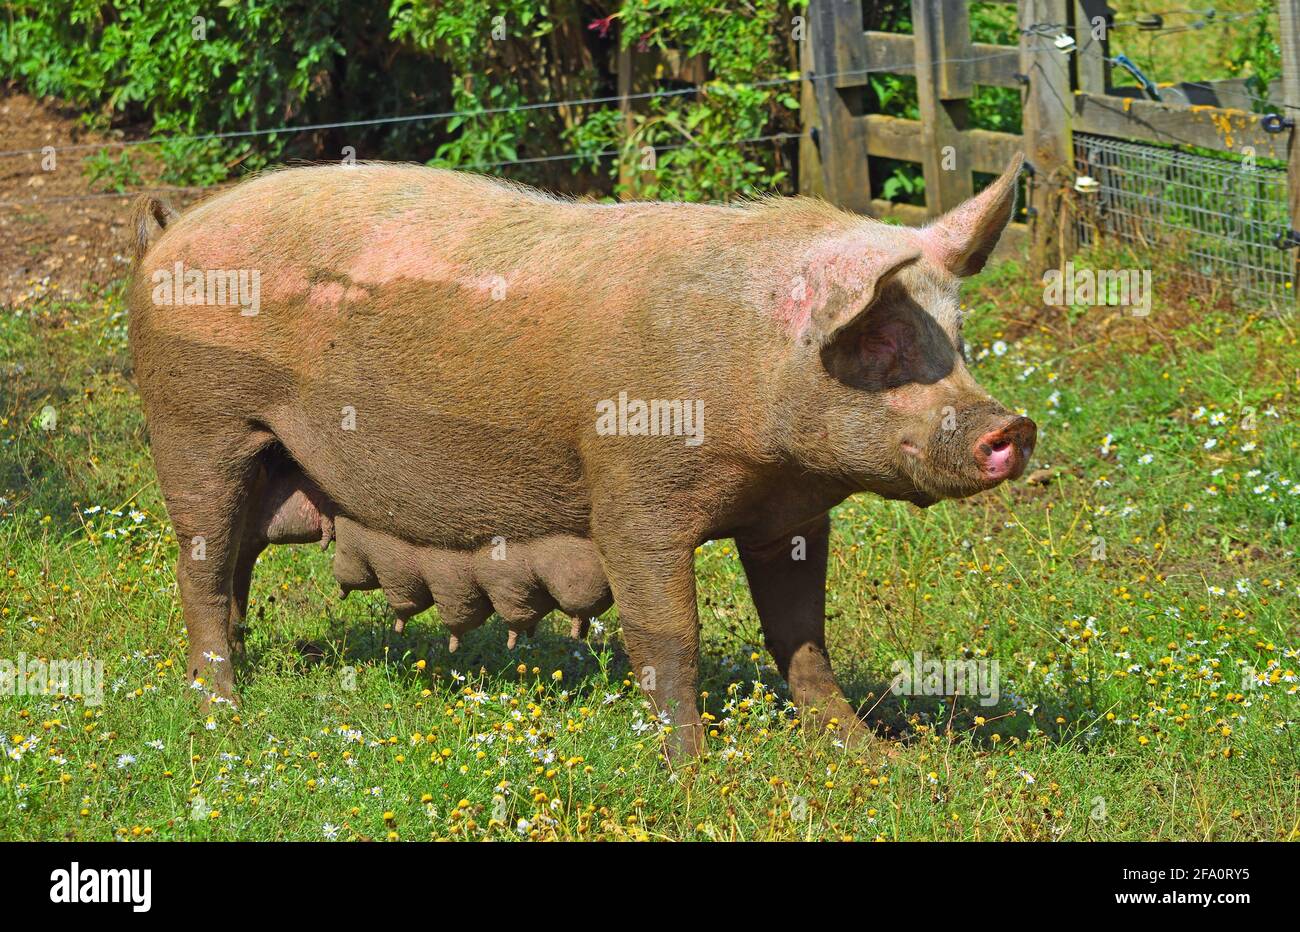 Muddy Female Pig standing on grass. Stock Photo